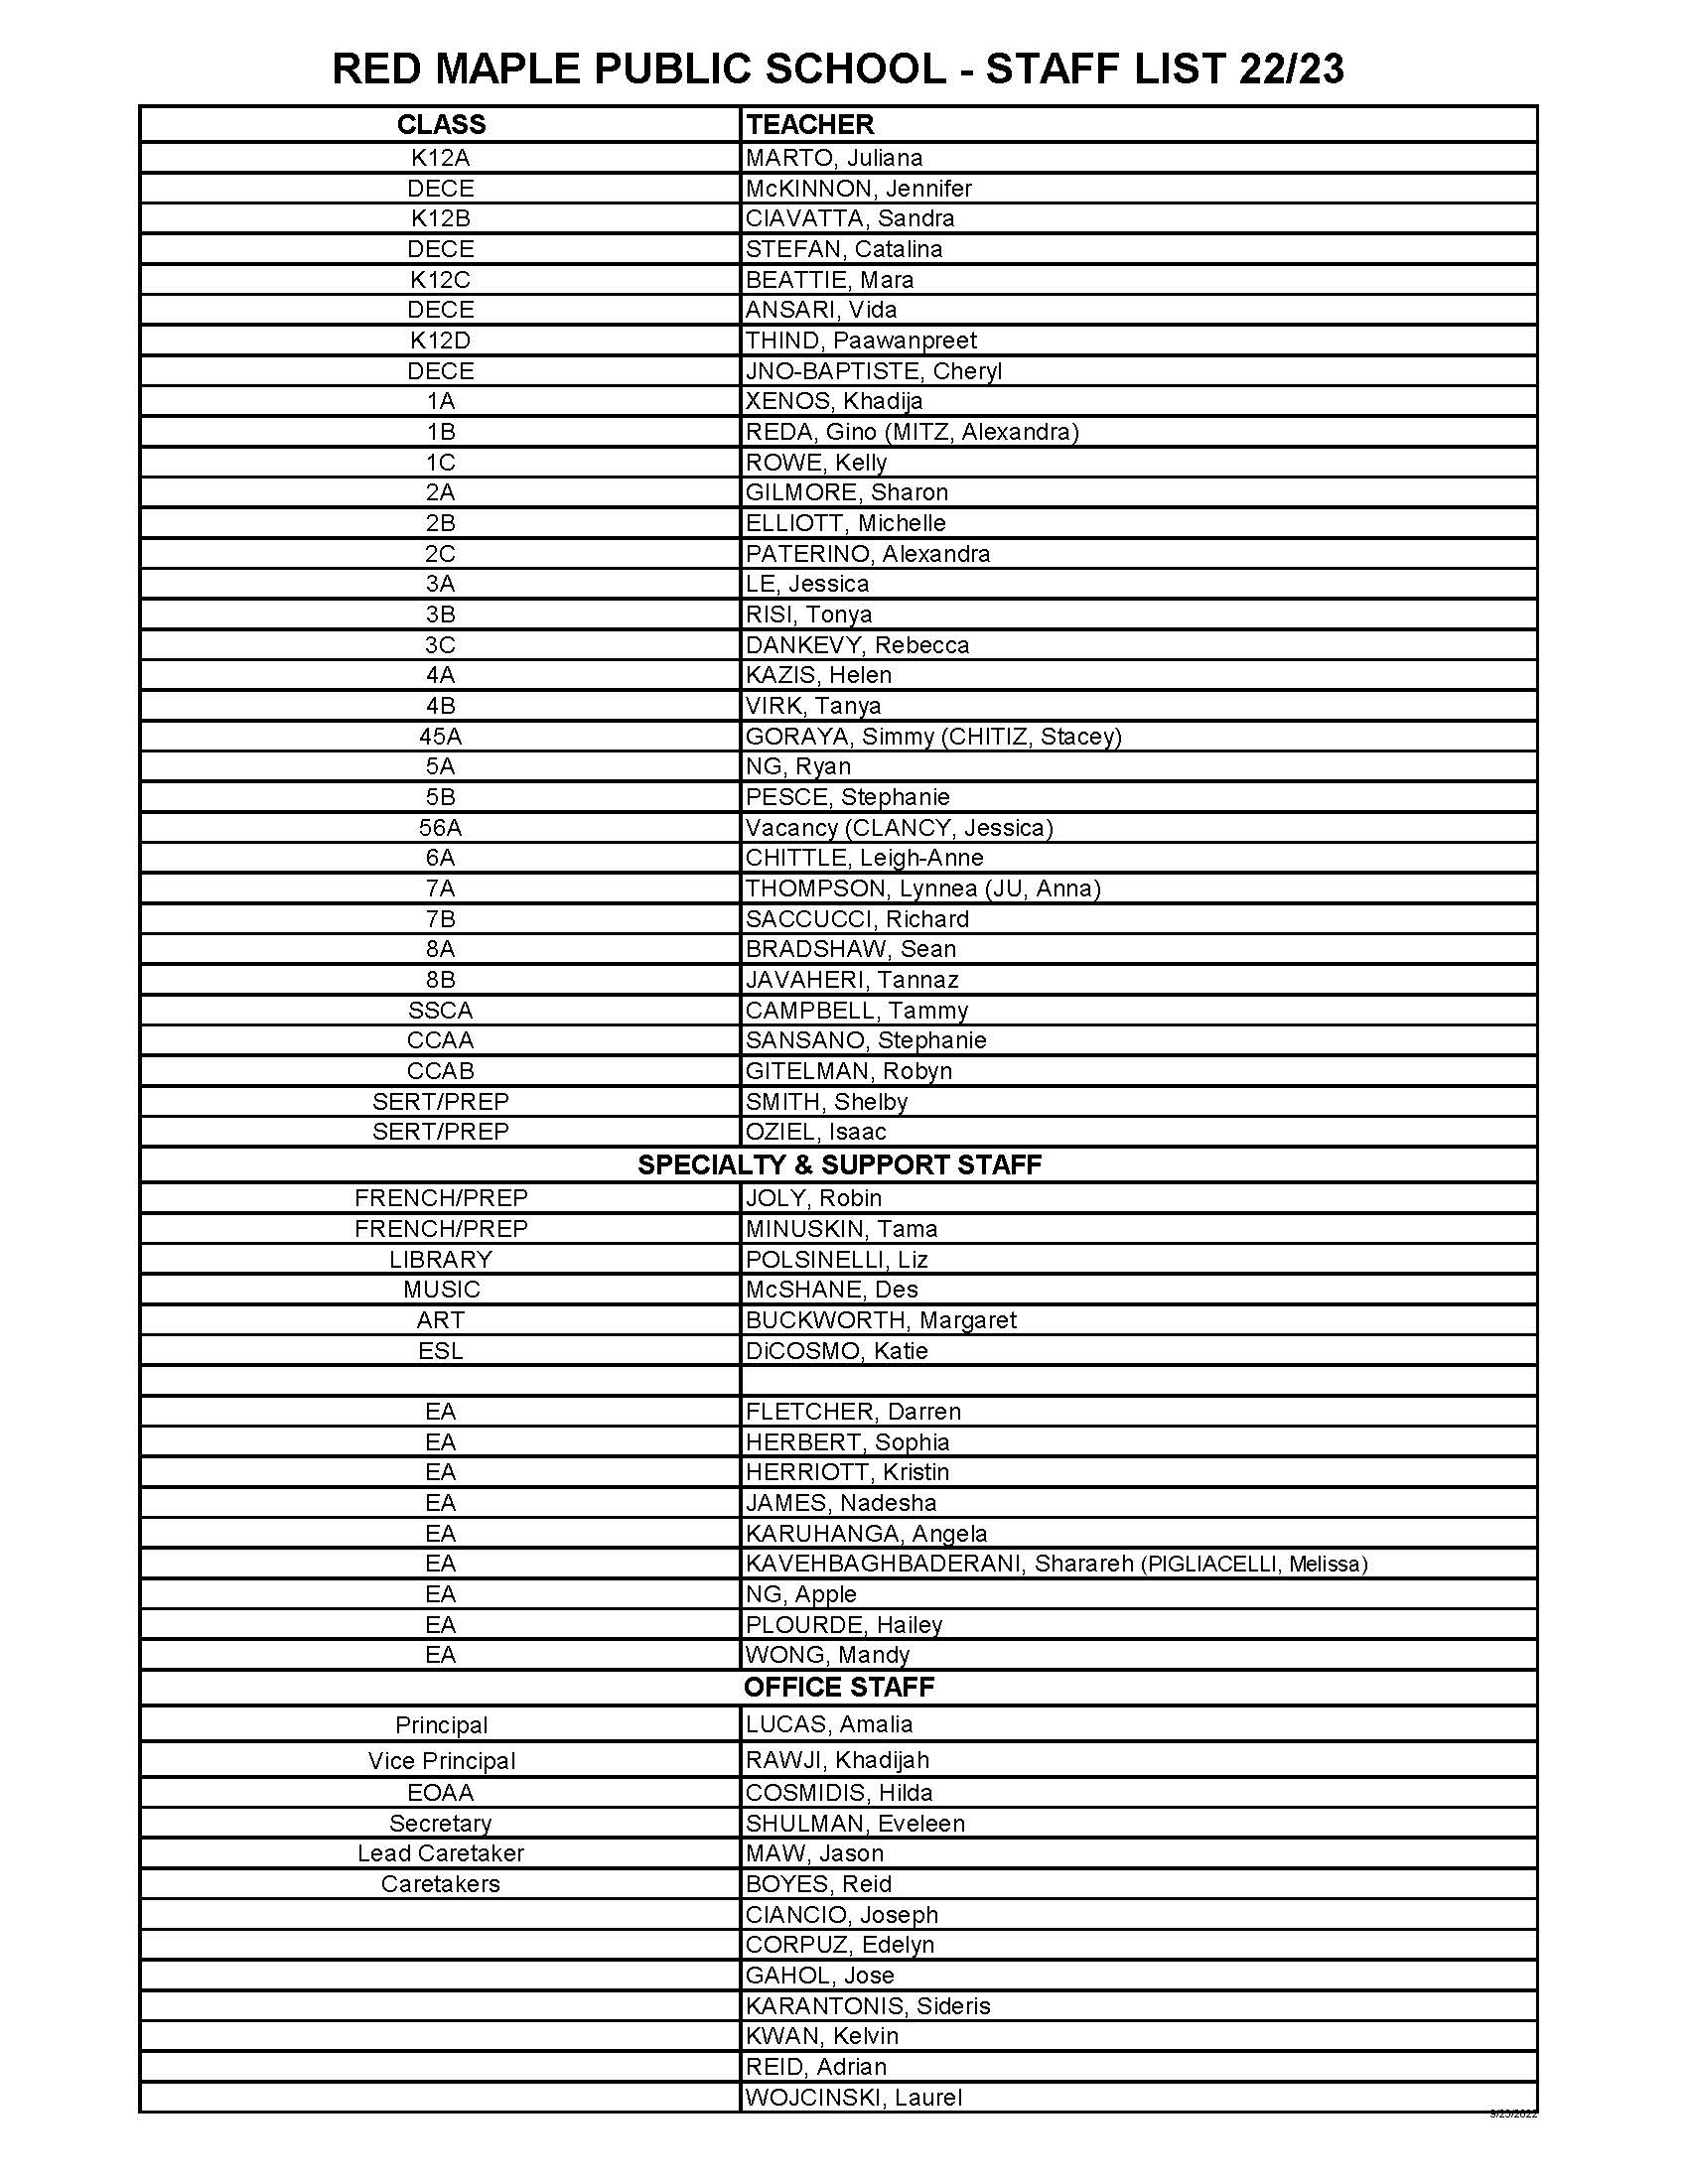 Staff List - Feb2022a.jpg